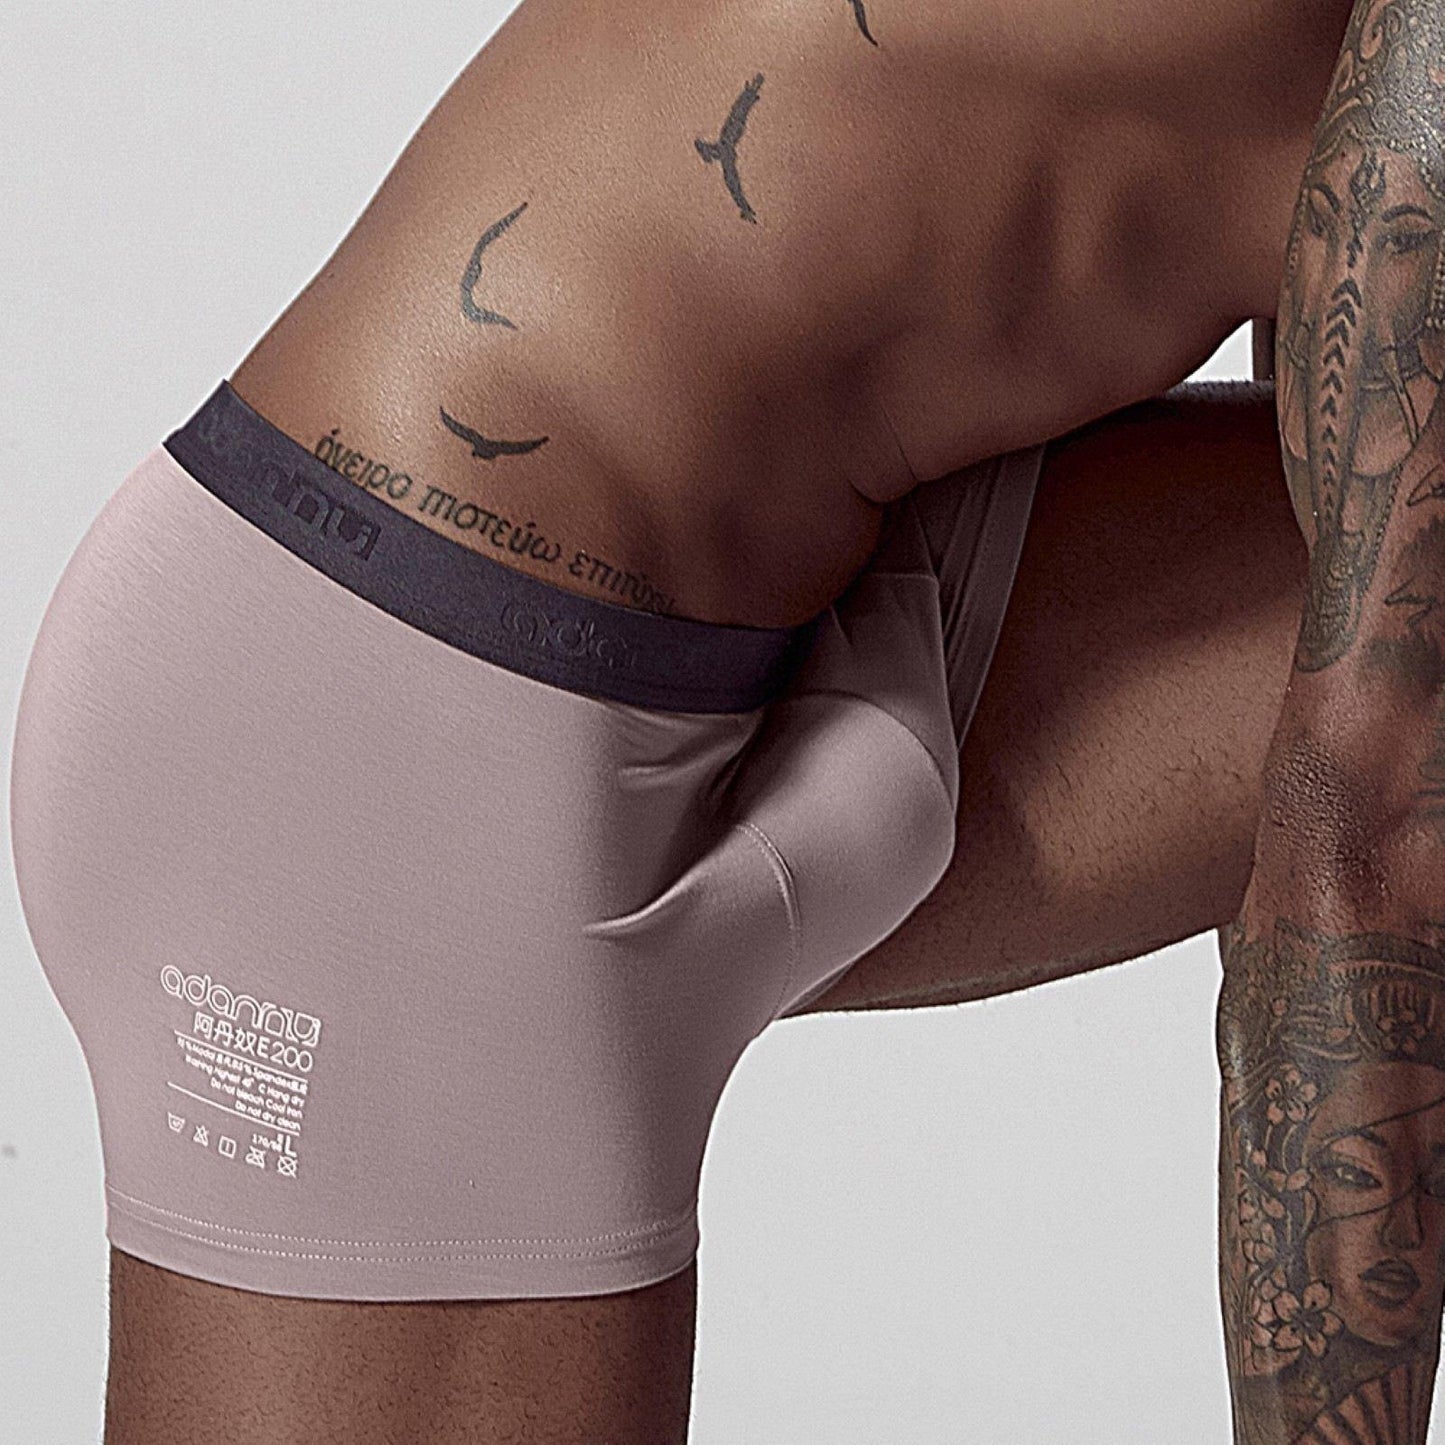 Underwear Comfortable Slim Boxer Underpants For Men